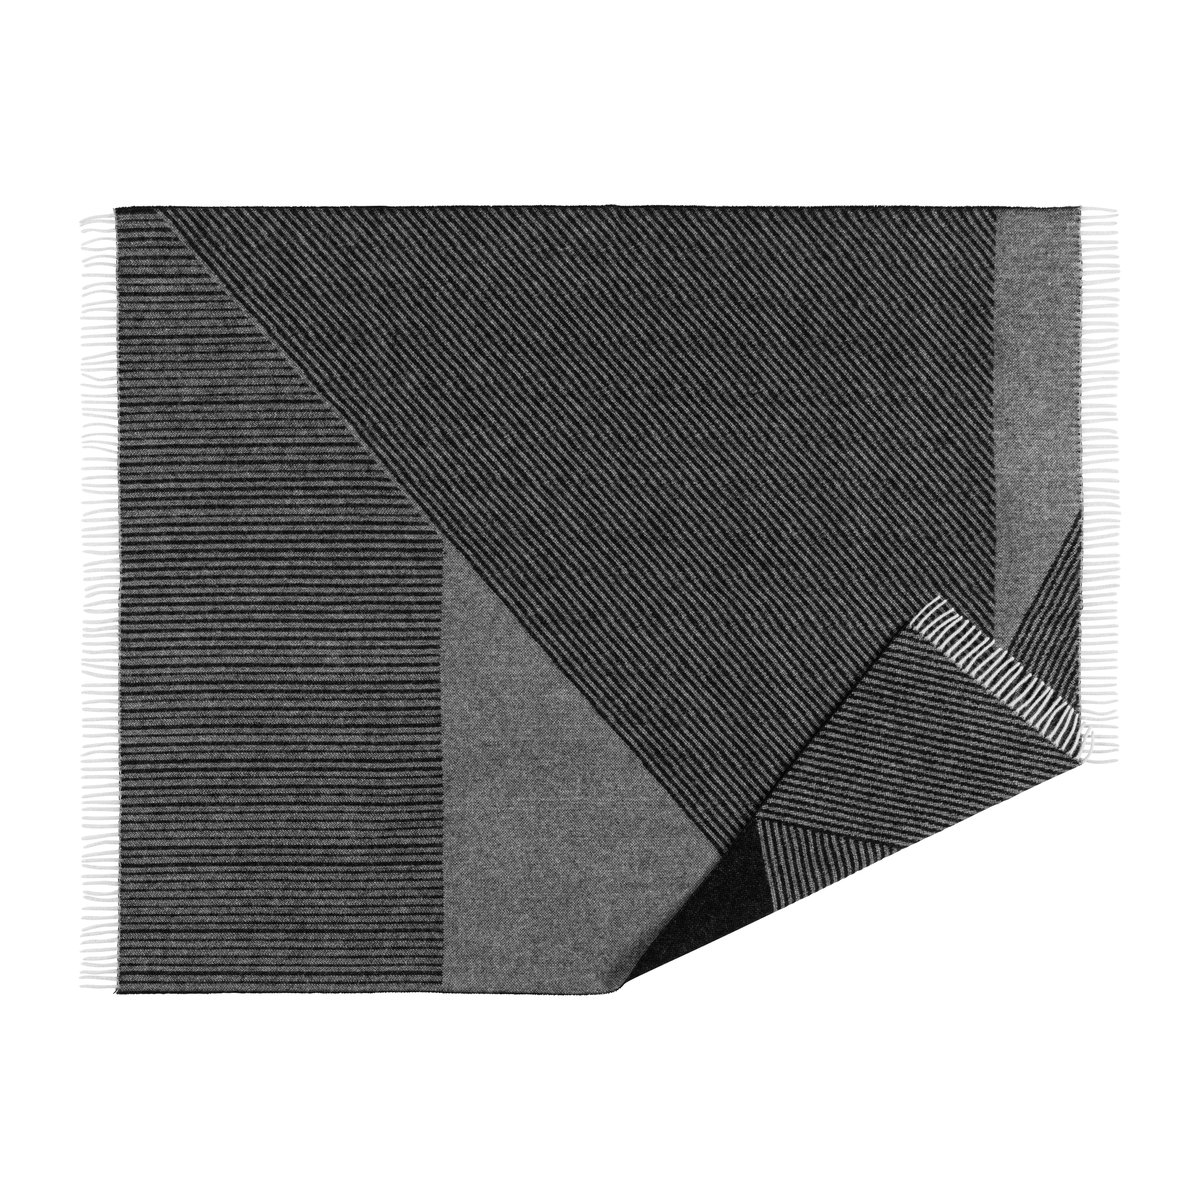 NJRD Stripes uldplaid 130×185 cm Sort